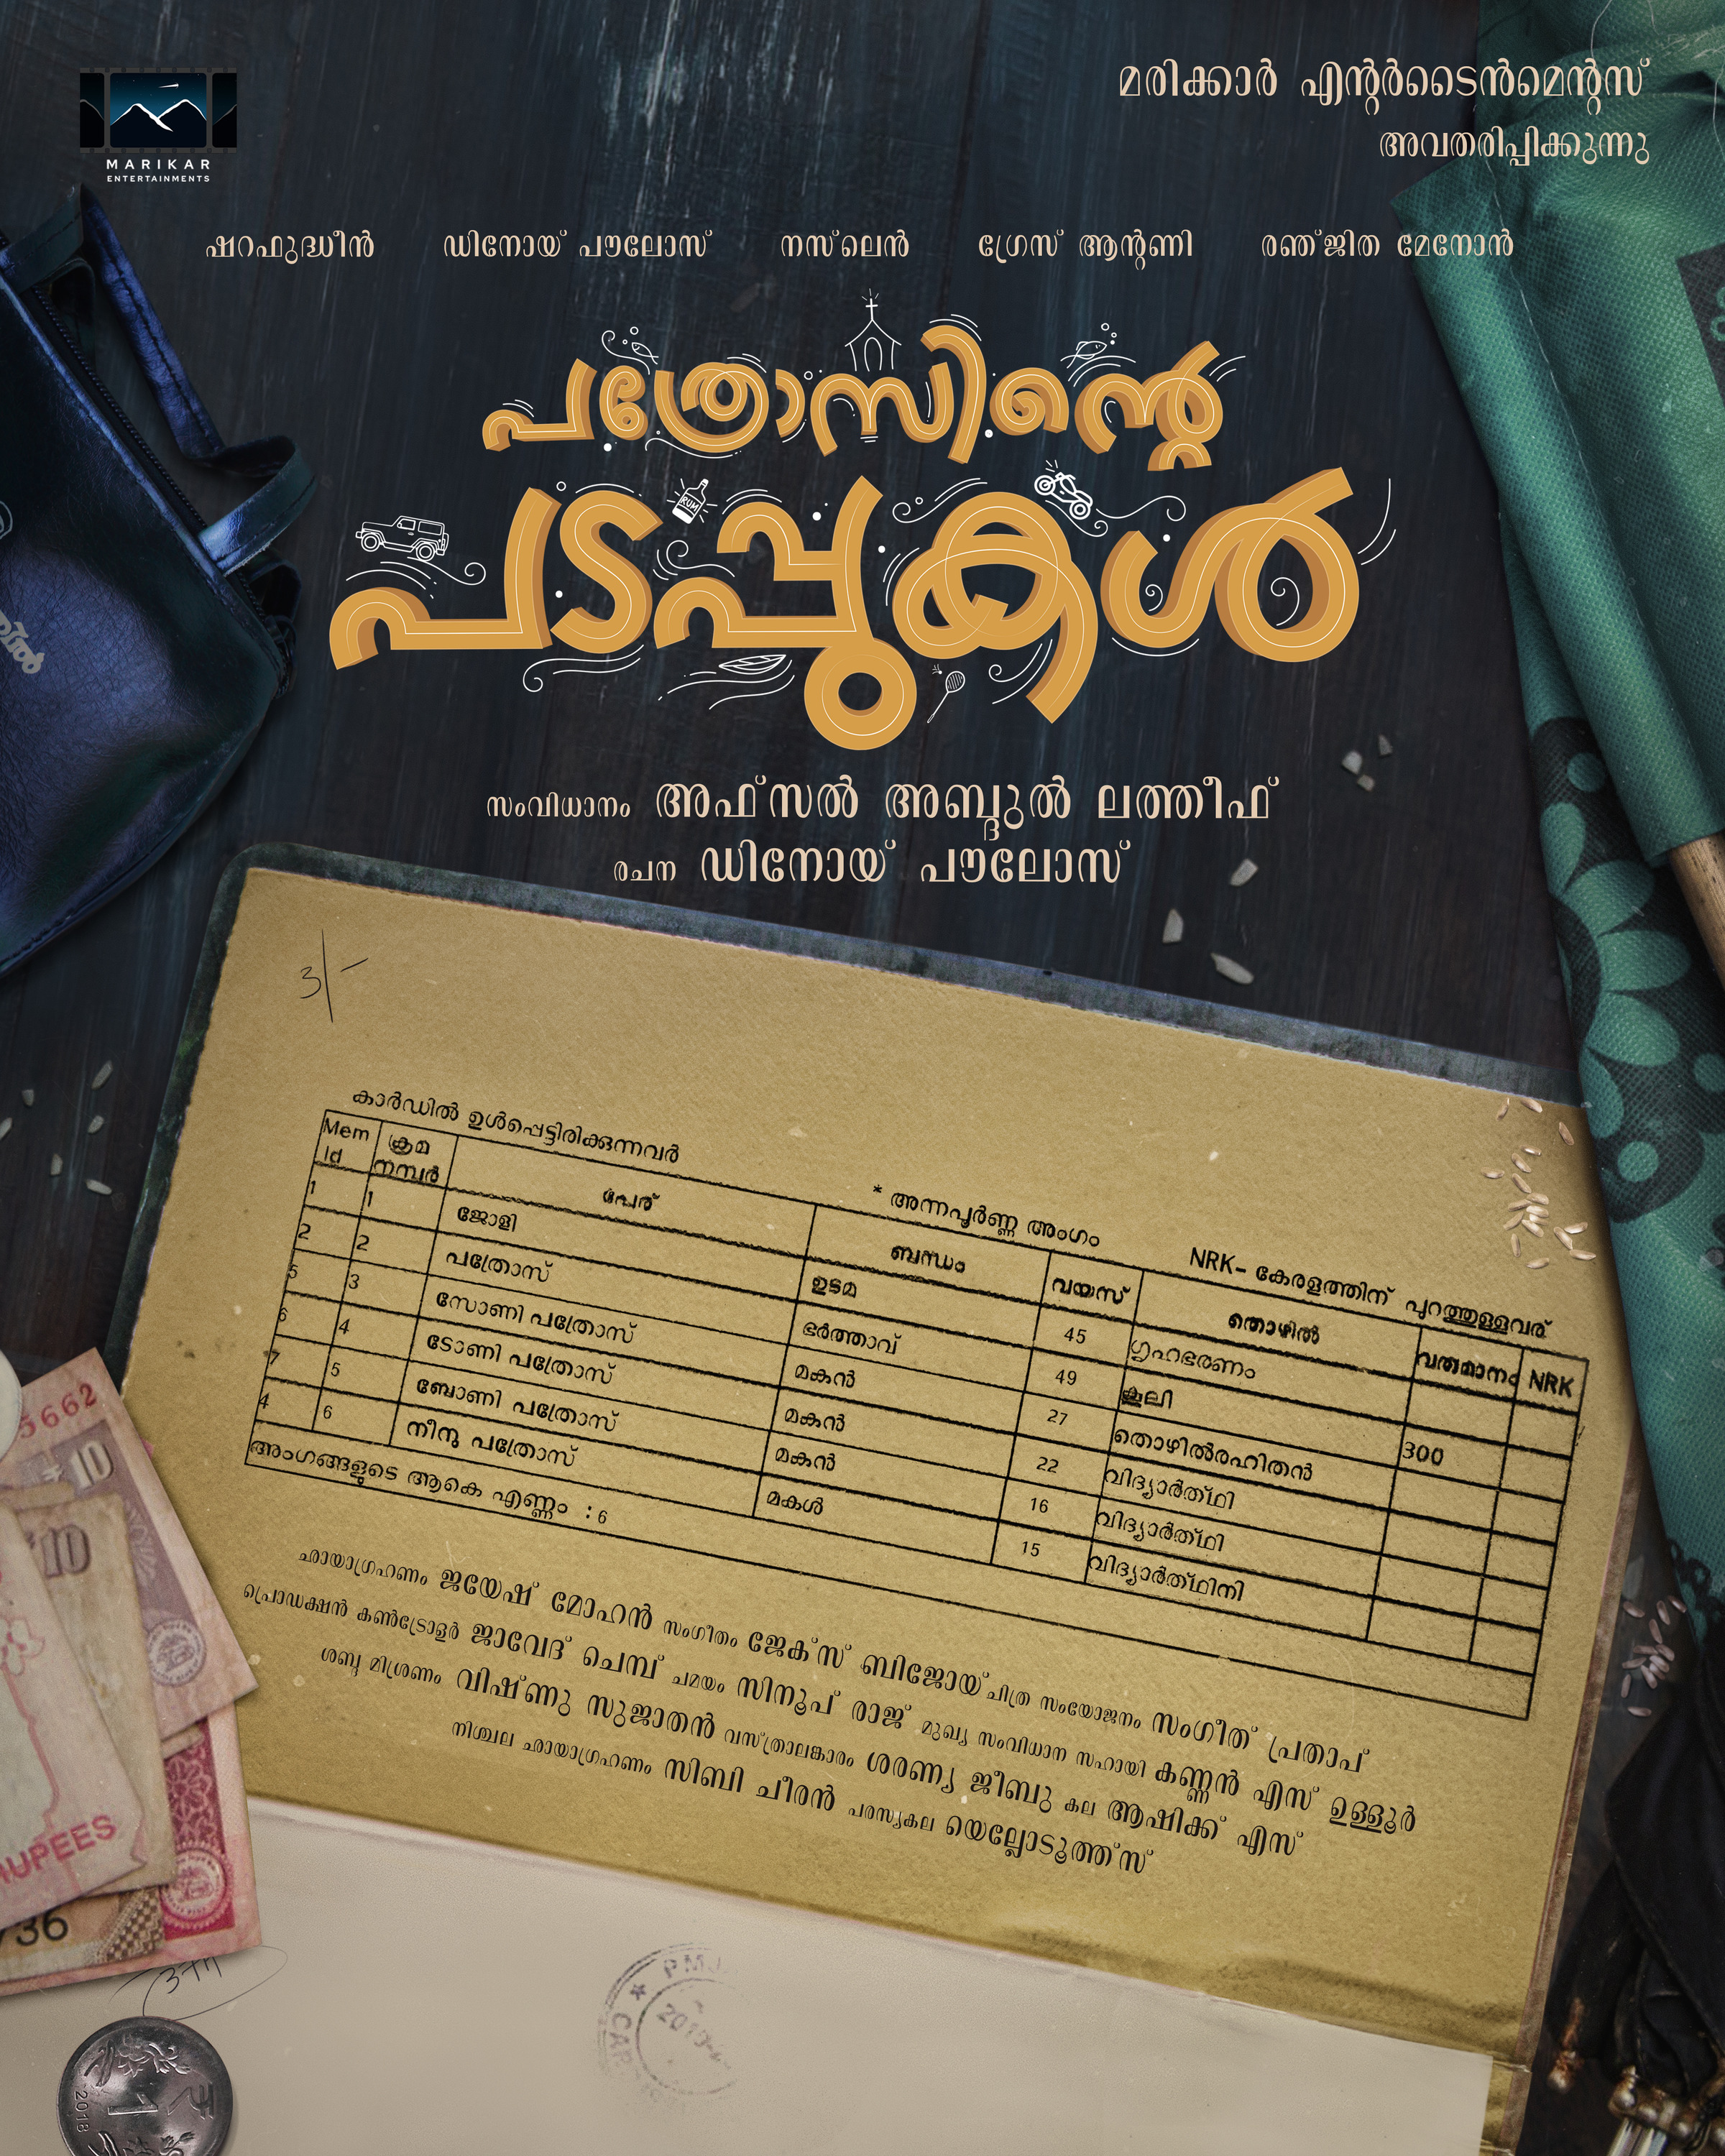 Mega Sized Movie Poster Image for Pathrosinte Padappukal 